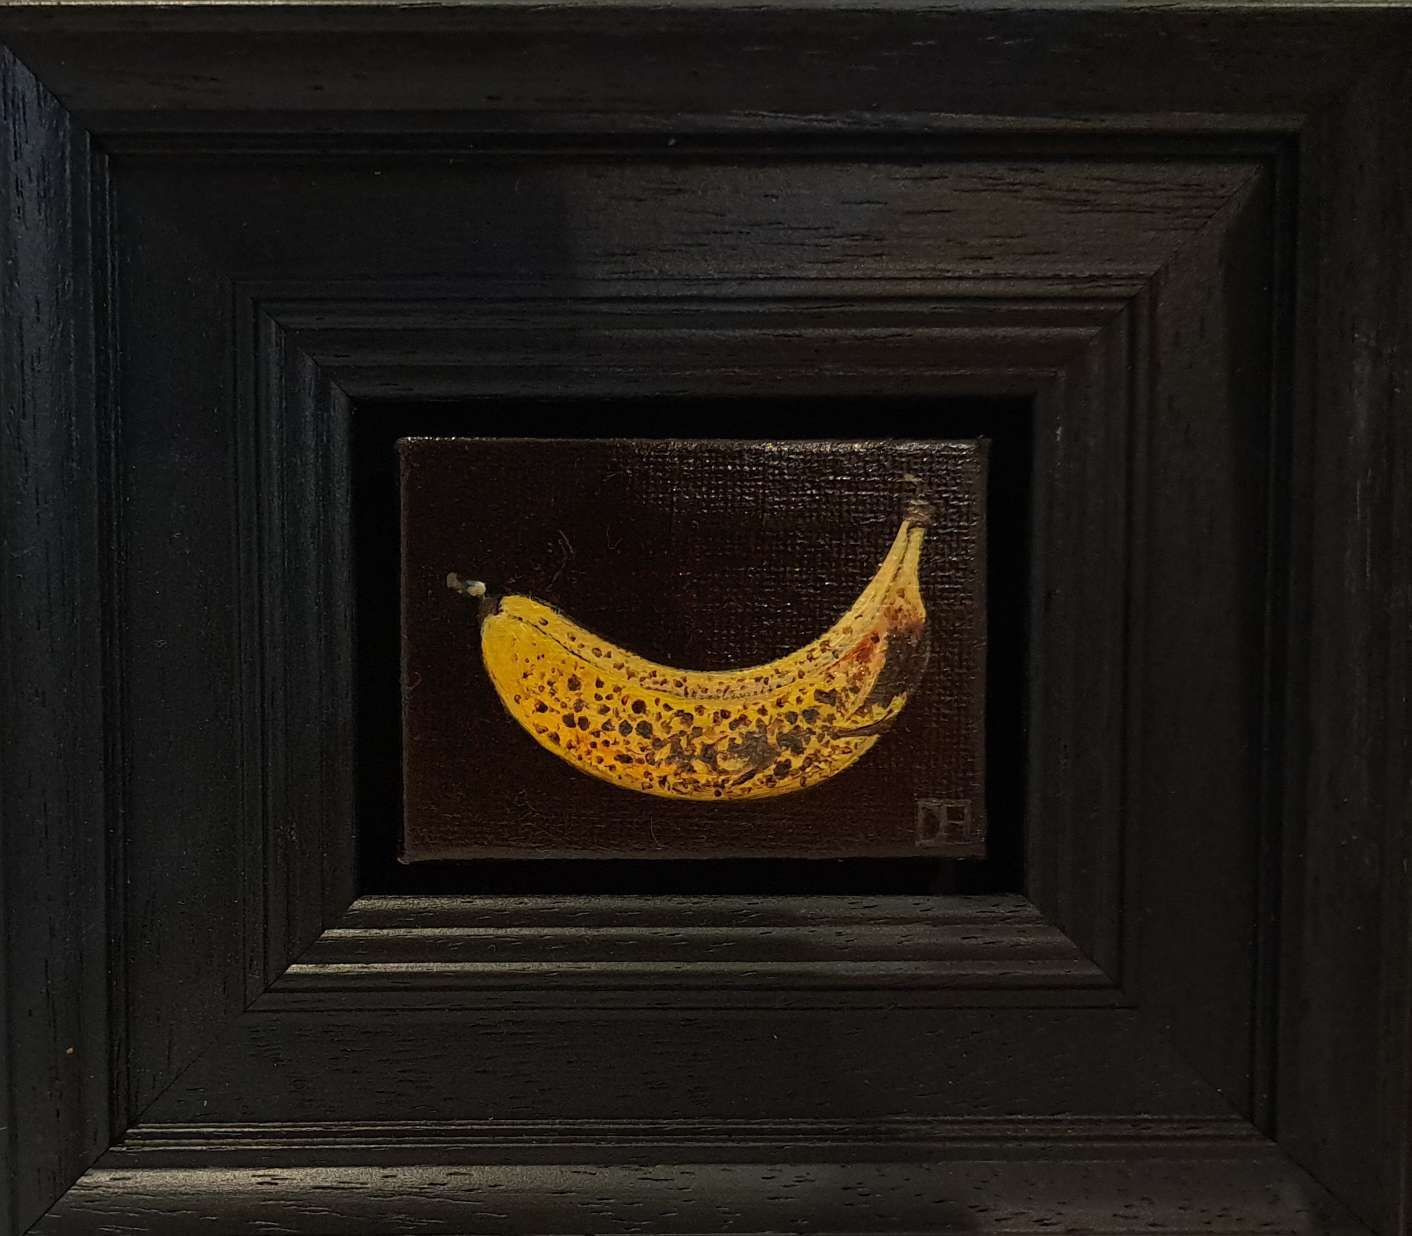 Pocket Quite Ripe Banana by Dani Humberstone